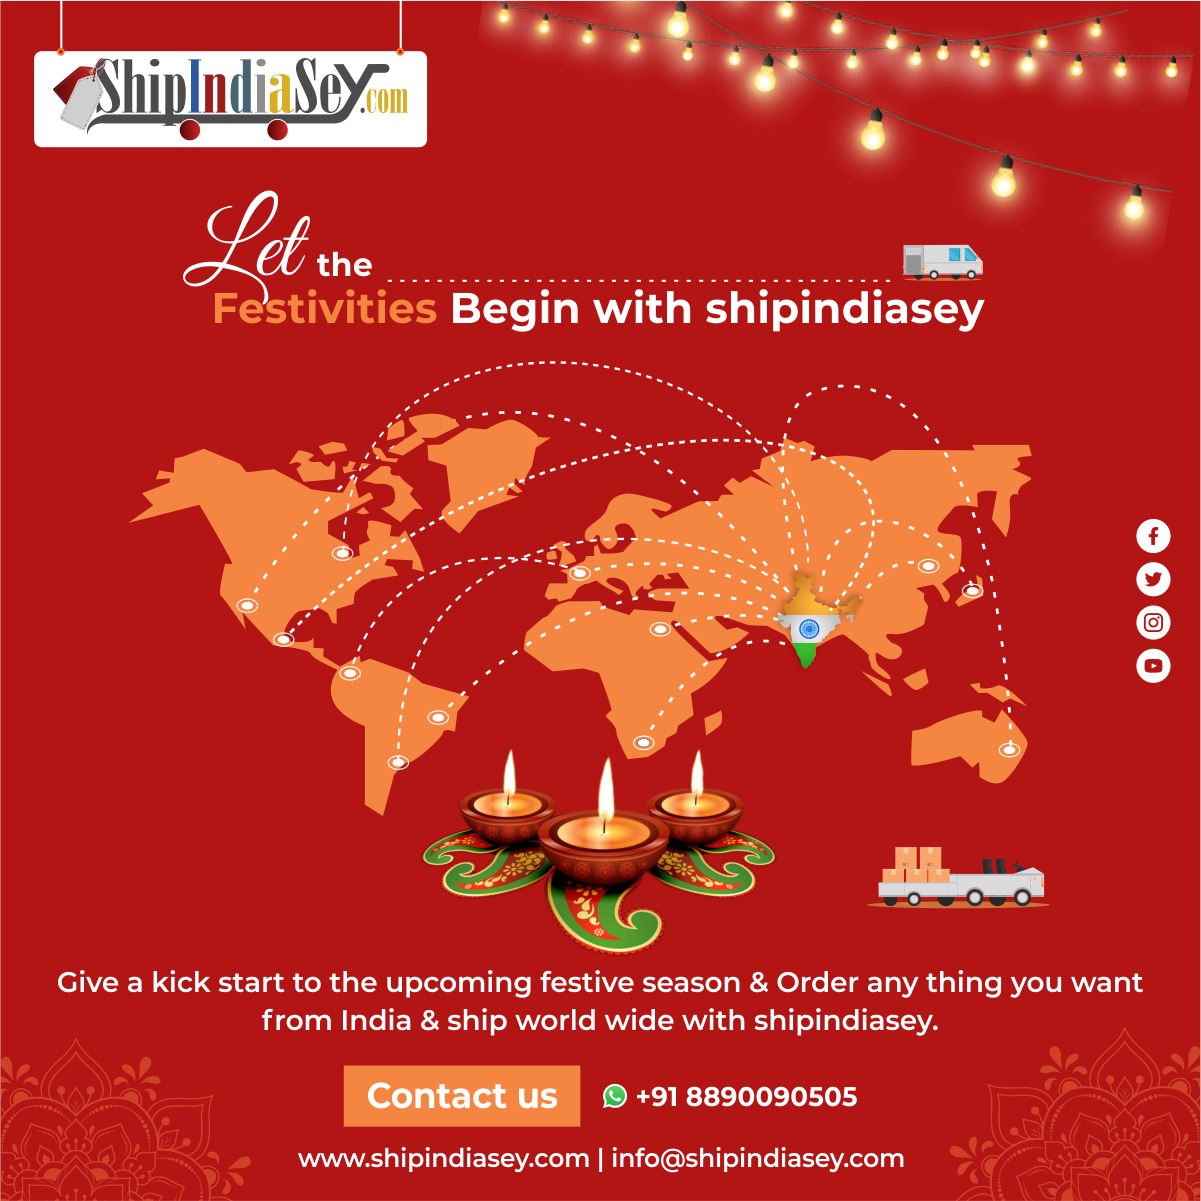 Tatacliq Online Shopping India - Ship Worldwide at Lowest Price